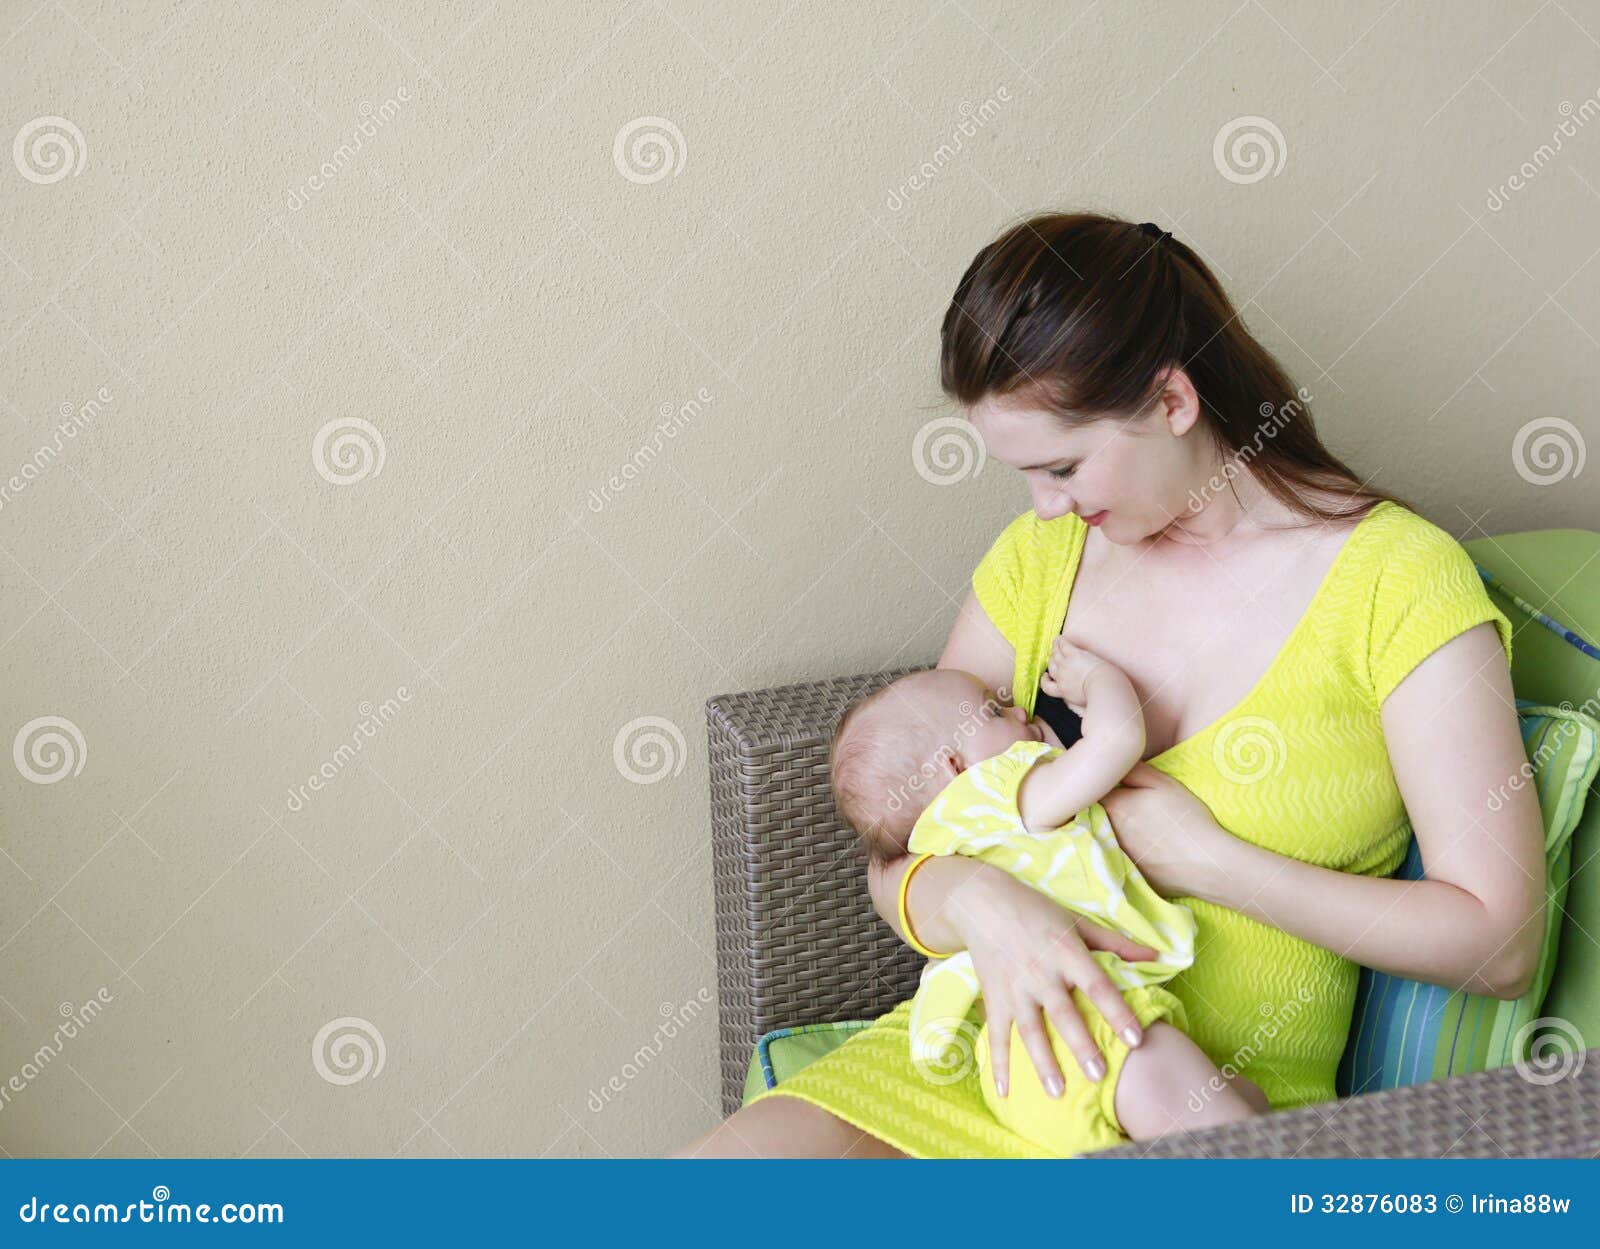 beautiful mother breastfeeding